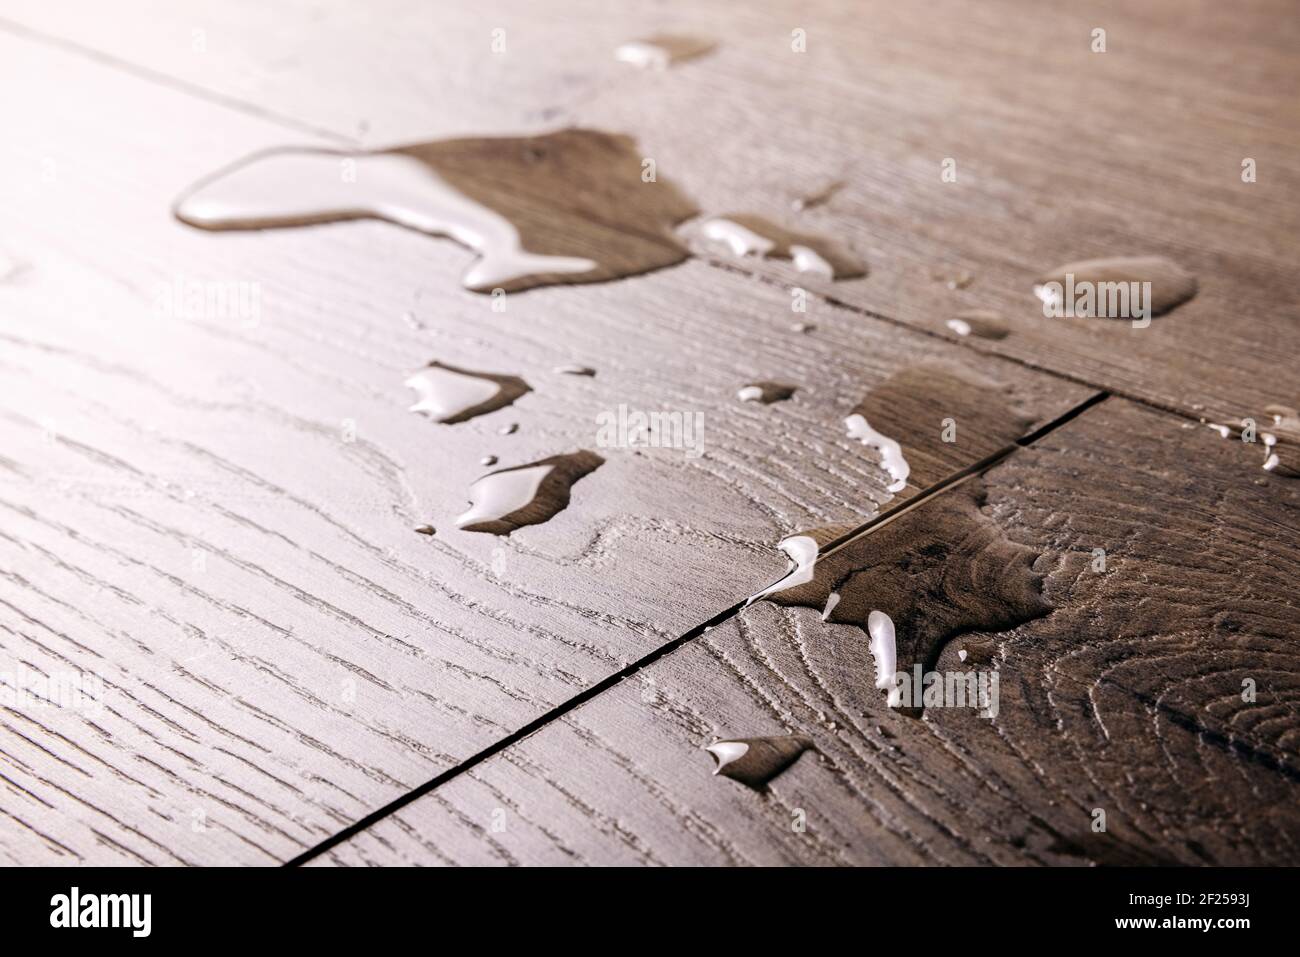 waterproof flooring - spilled water drops on wooden laminate floor Stock Photo